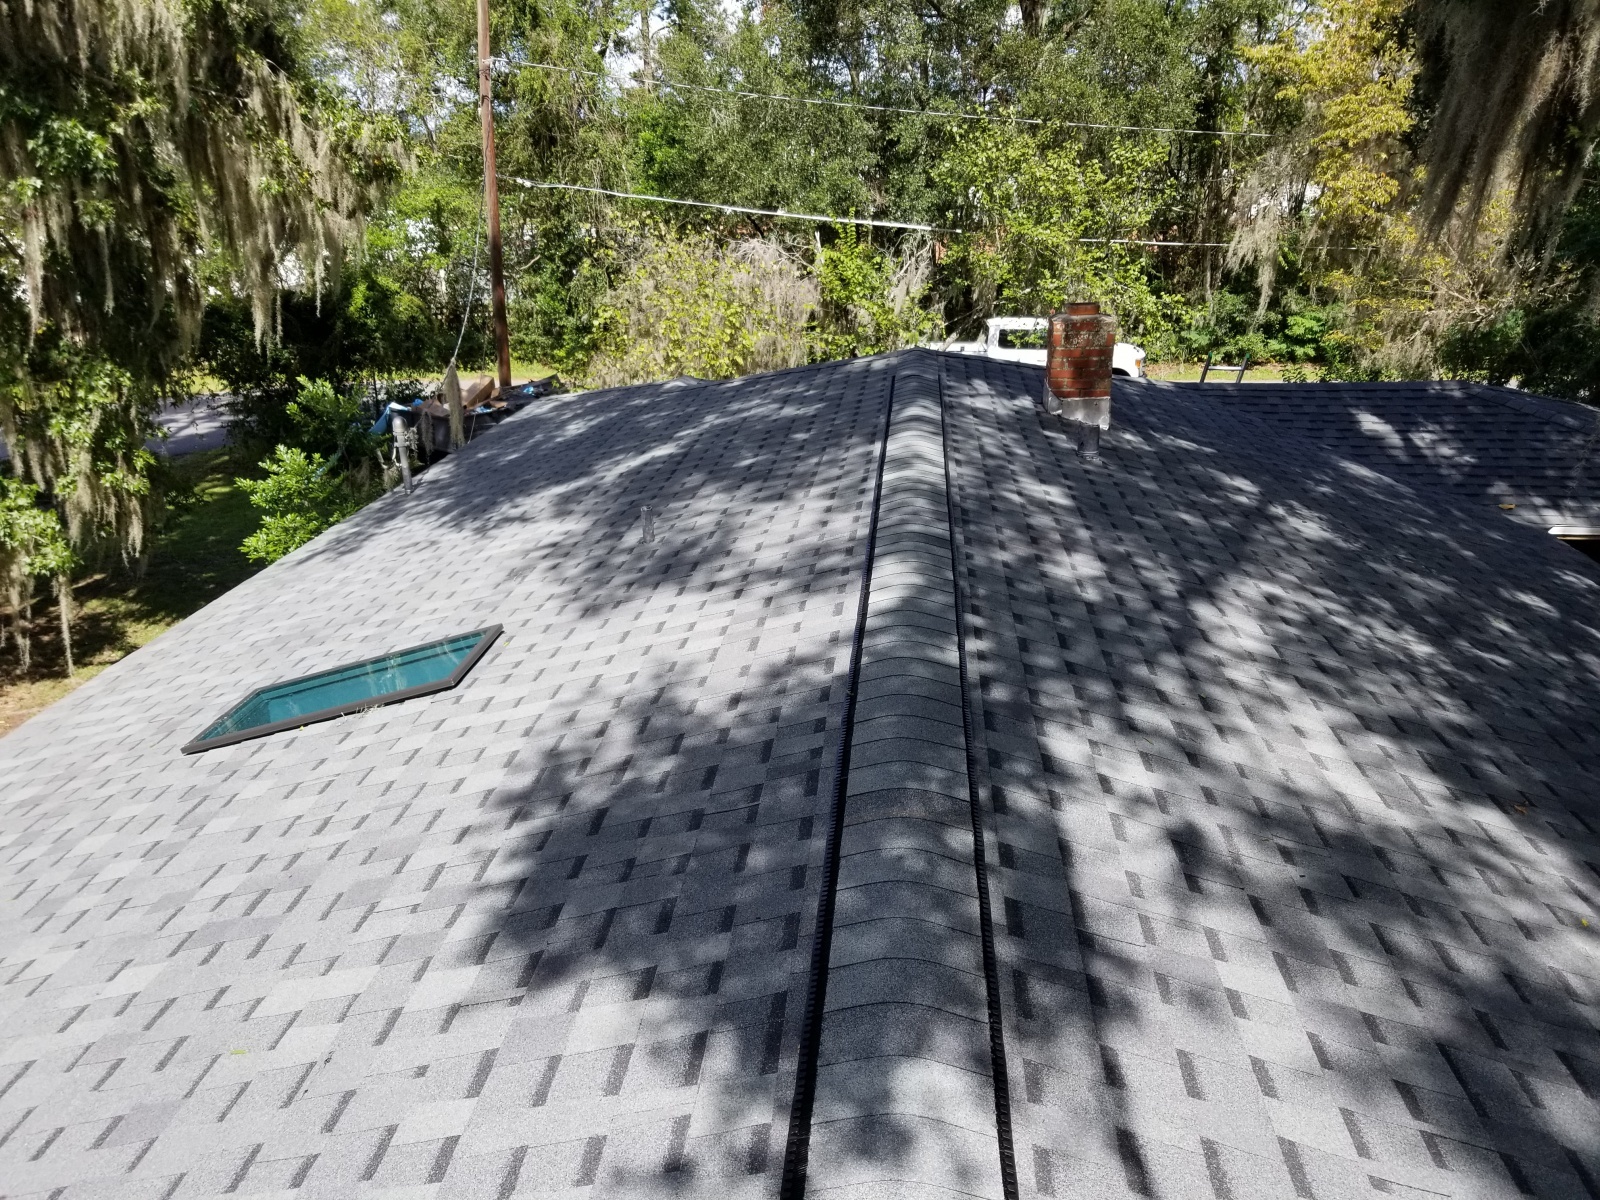 Shingle roof with skylight